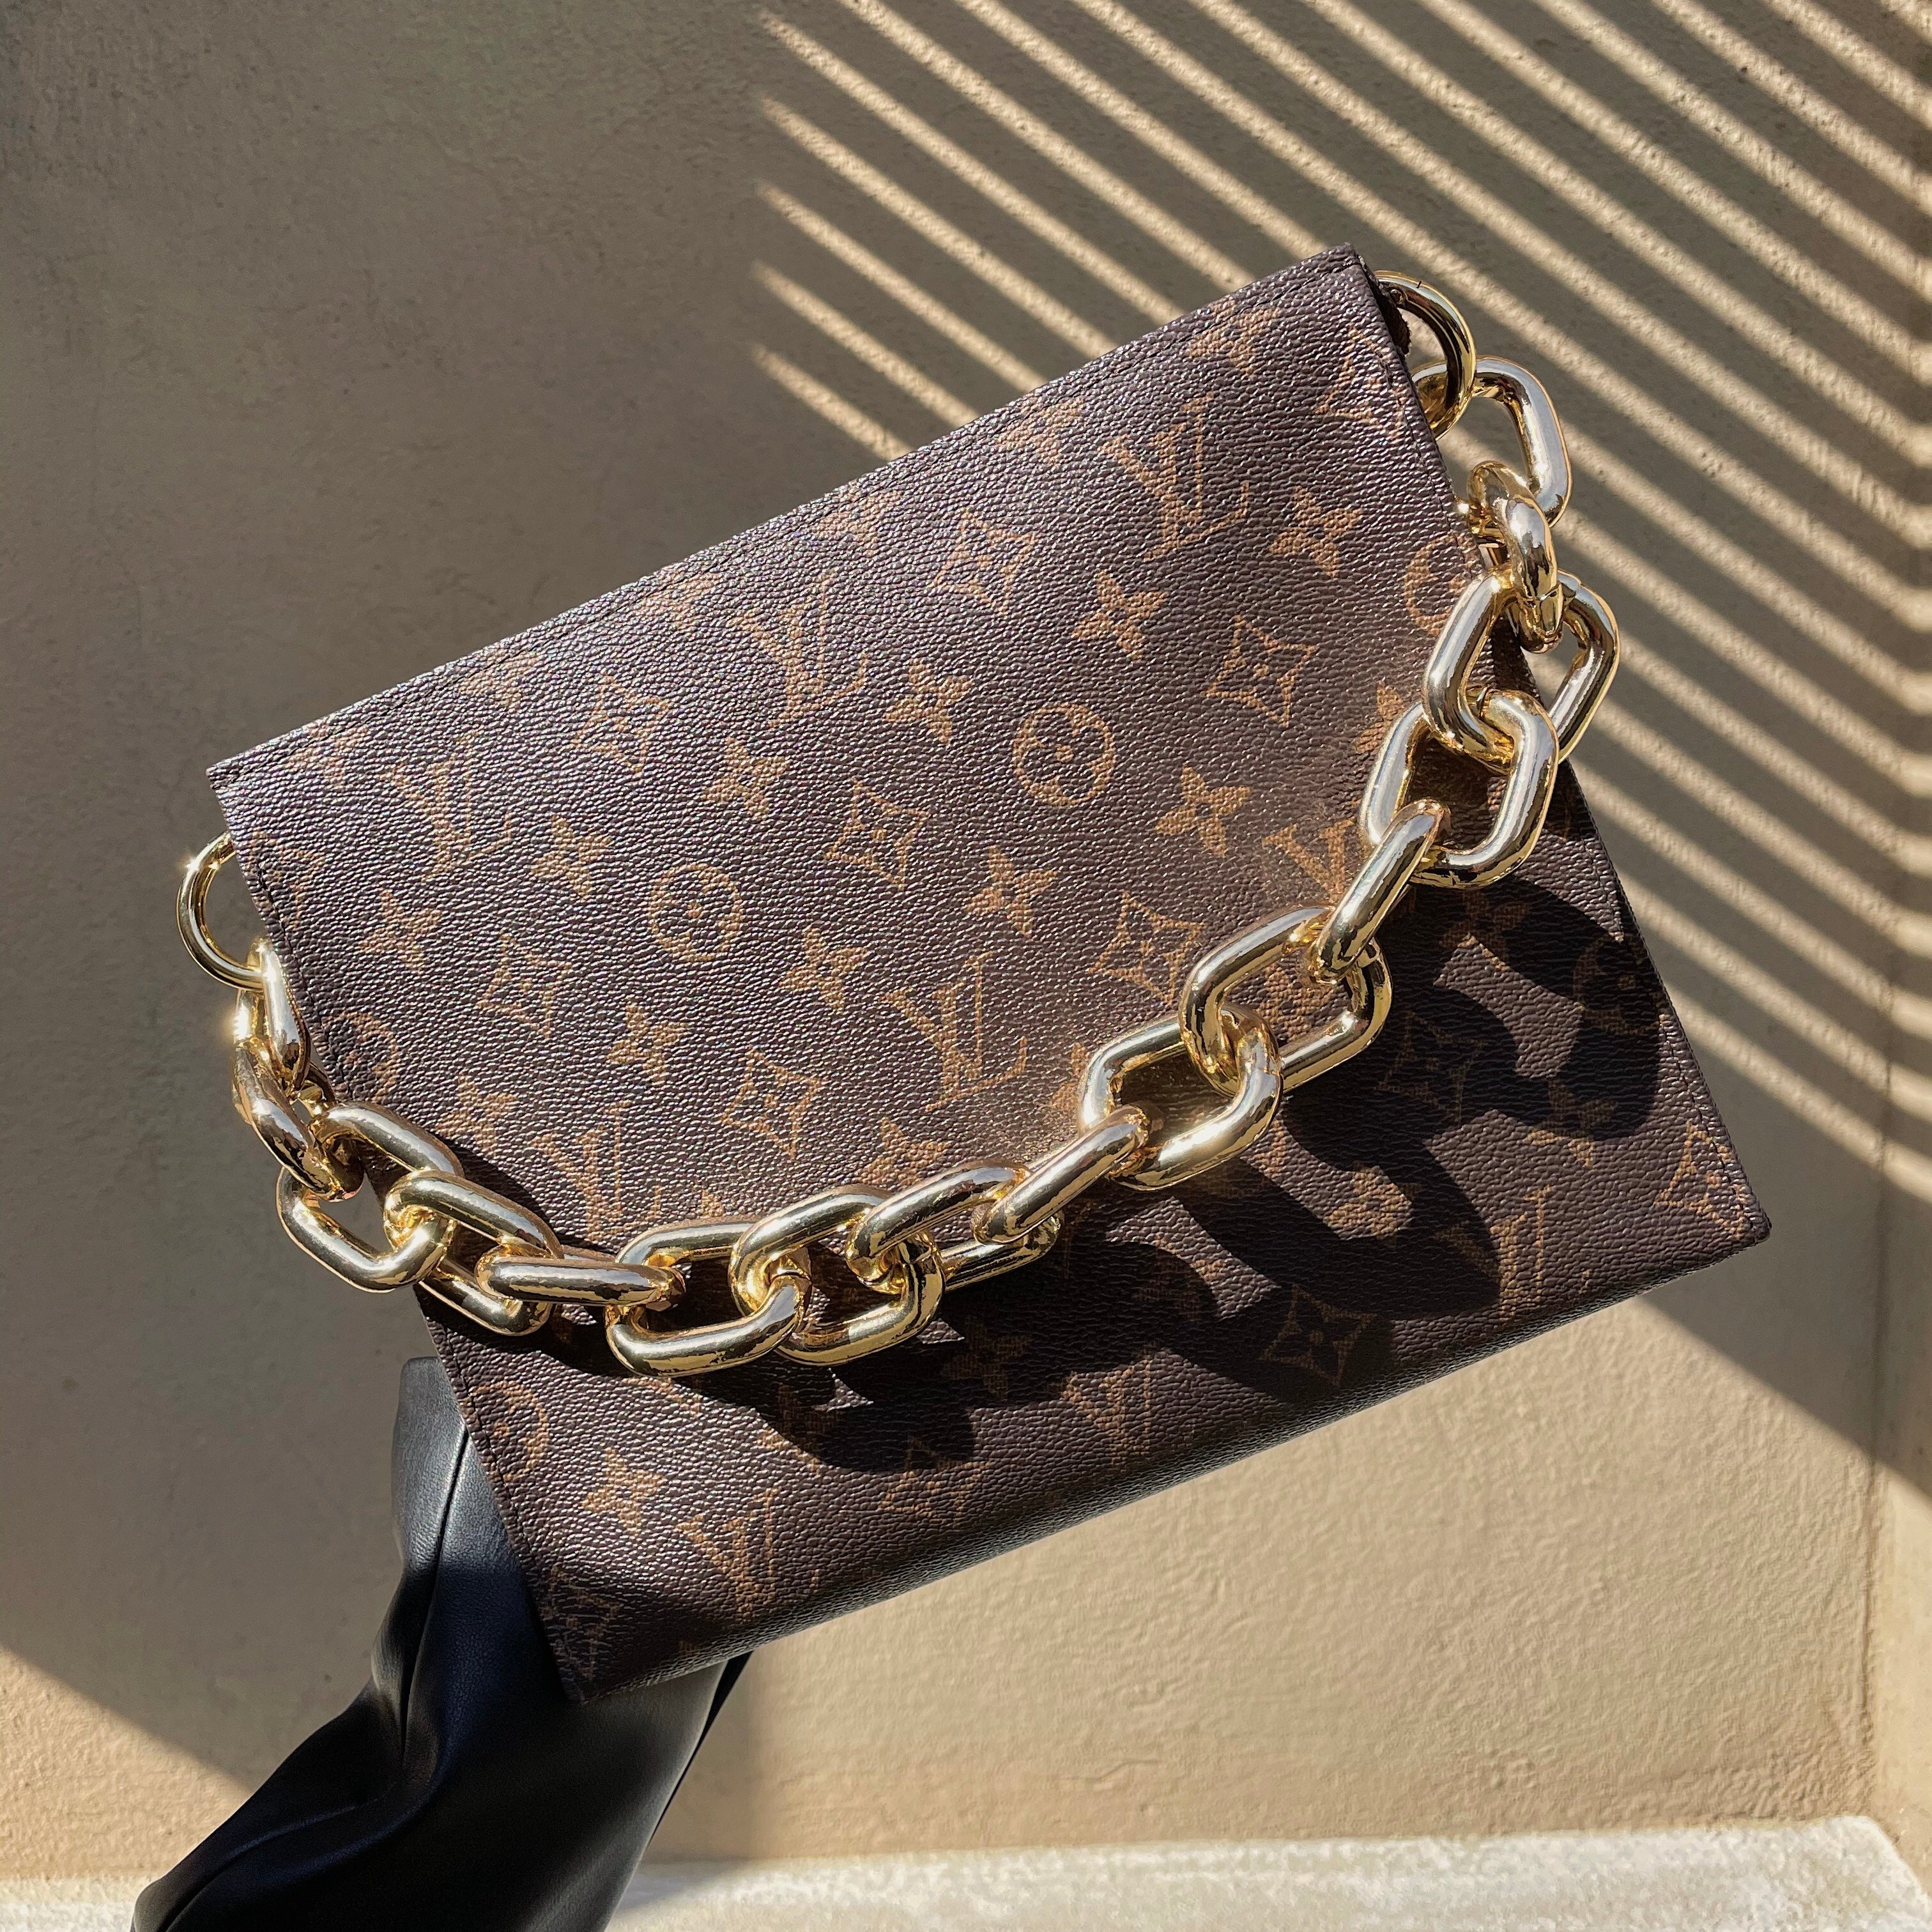 BaginBag | Accessory For Louis Vuitton Squared Chain - Tracolla 45cm | Louis Vuitton Strap | Designer Purse Insert | Handbag Strap | Bag Insert Organizer | LV Strap Bag | Luxury Bag Accessory | Bag Protector | LV Shoulder Strap